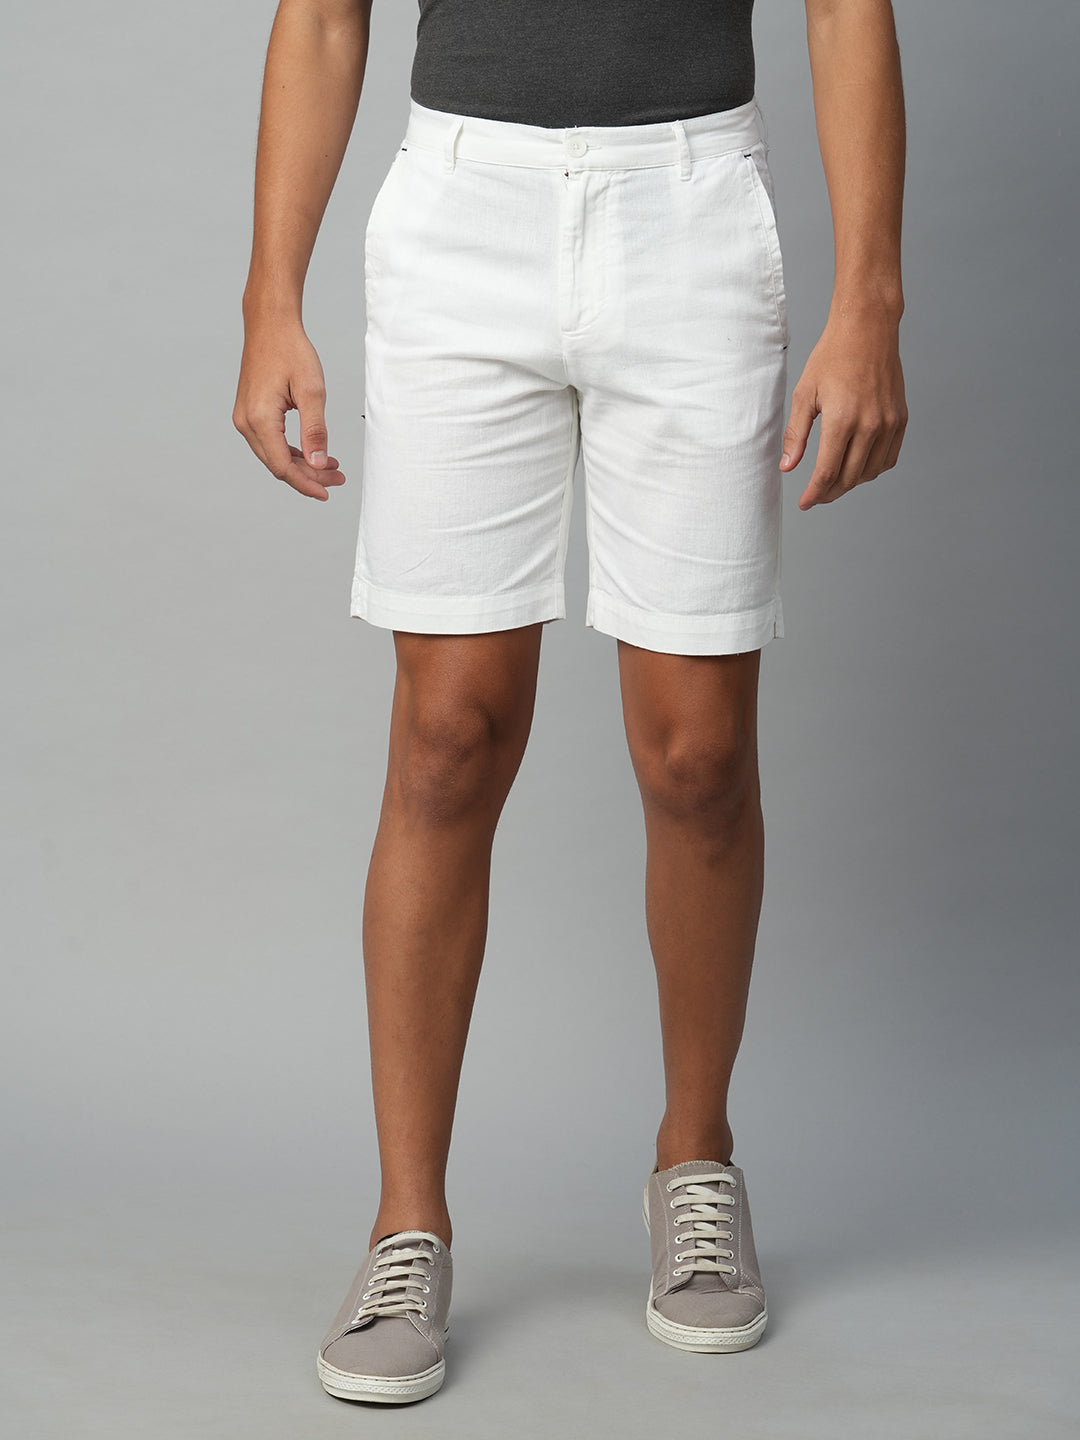 Men's White Cotton Linen Regular Fit Shorts